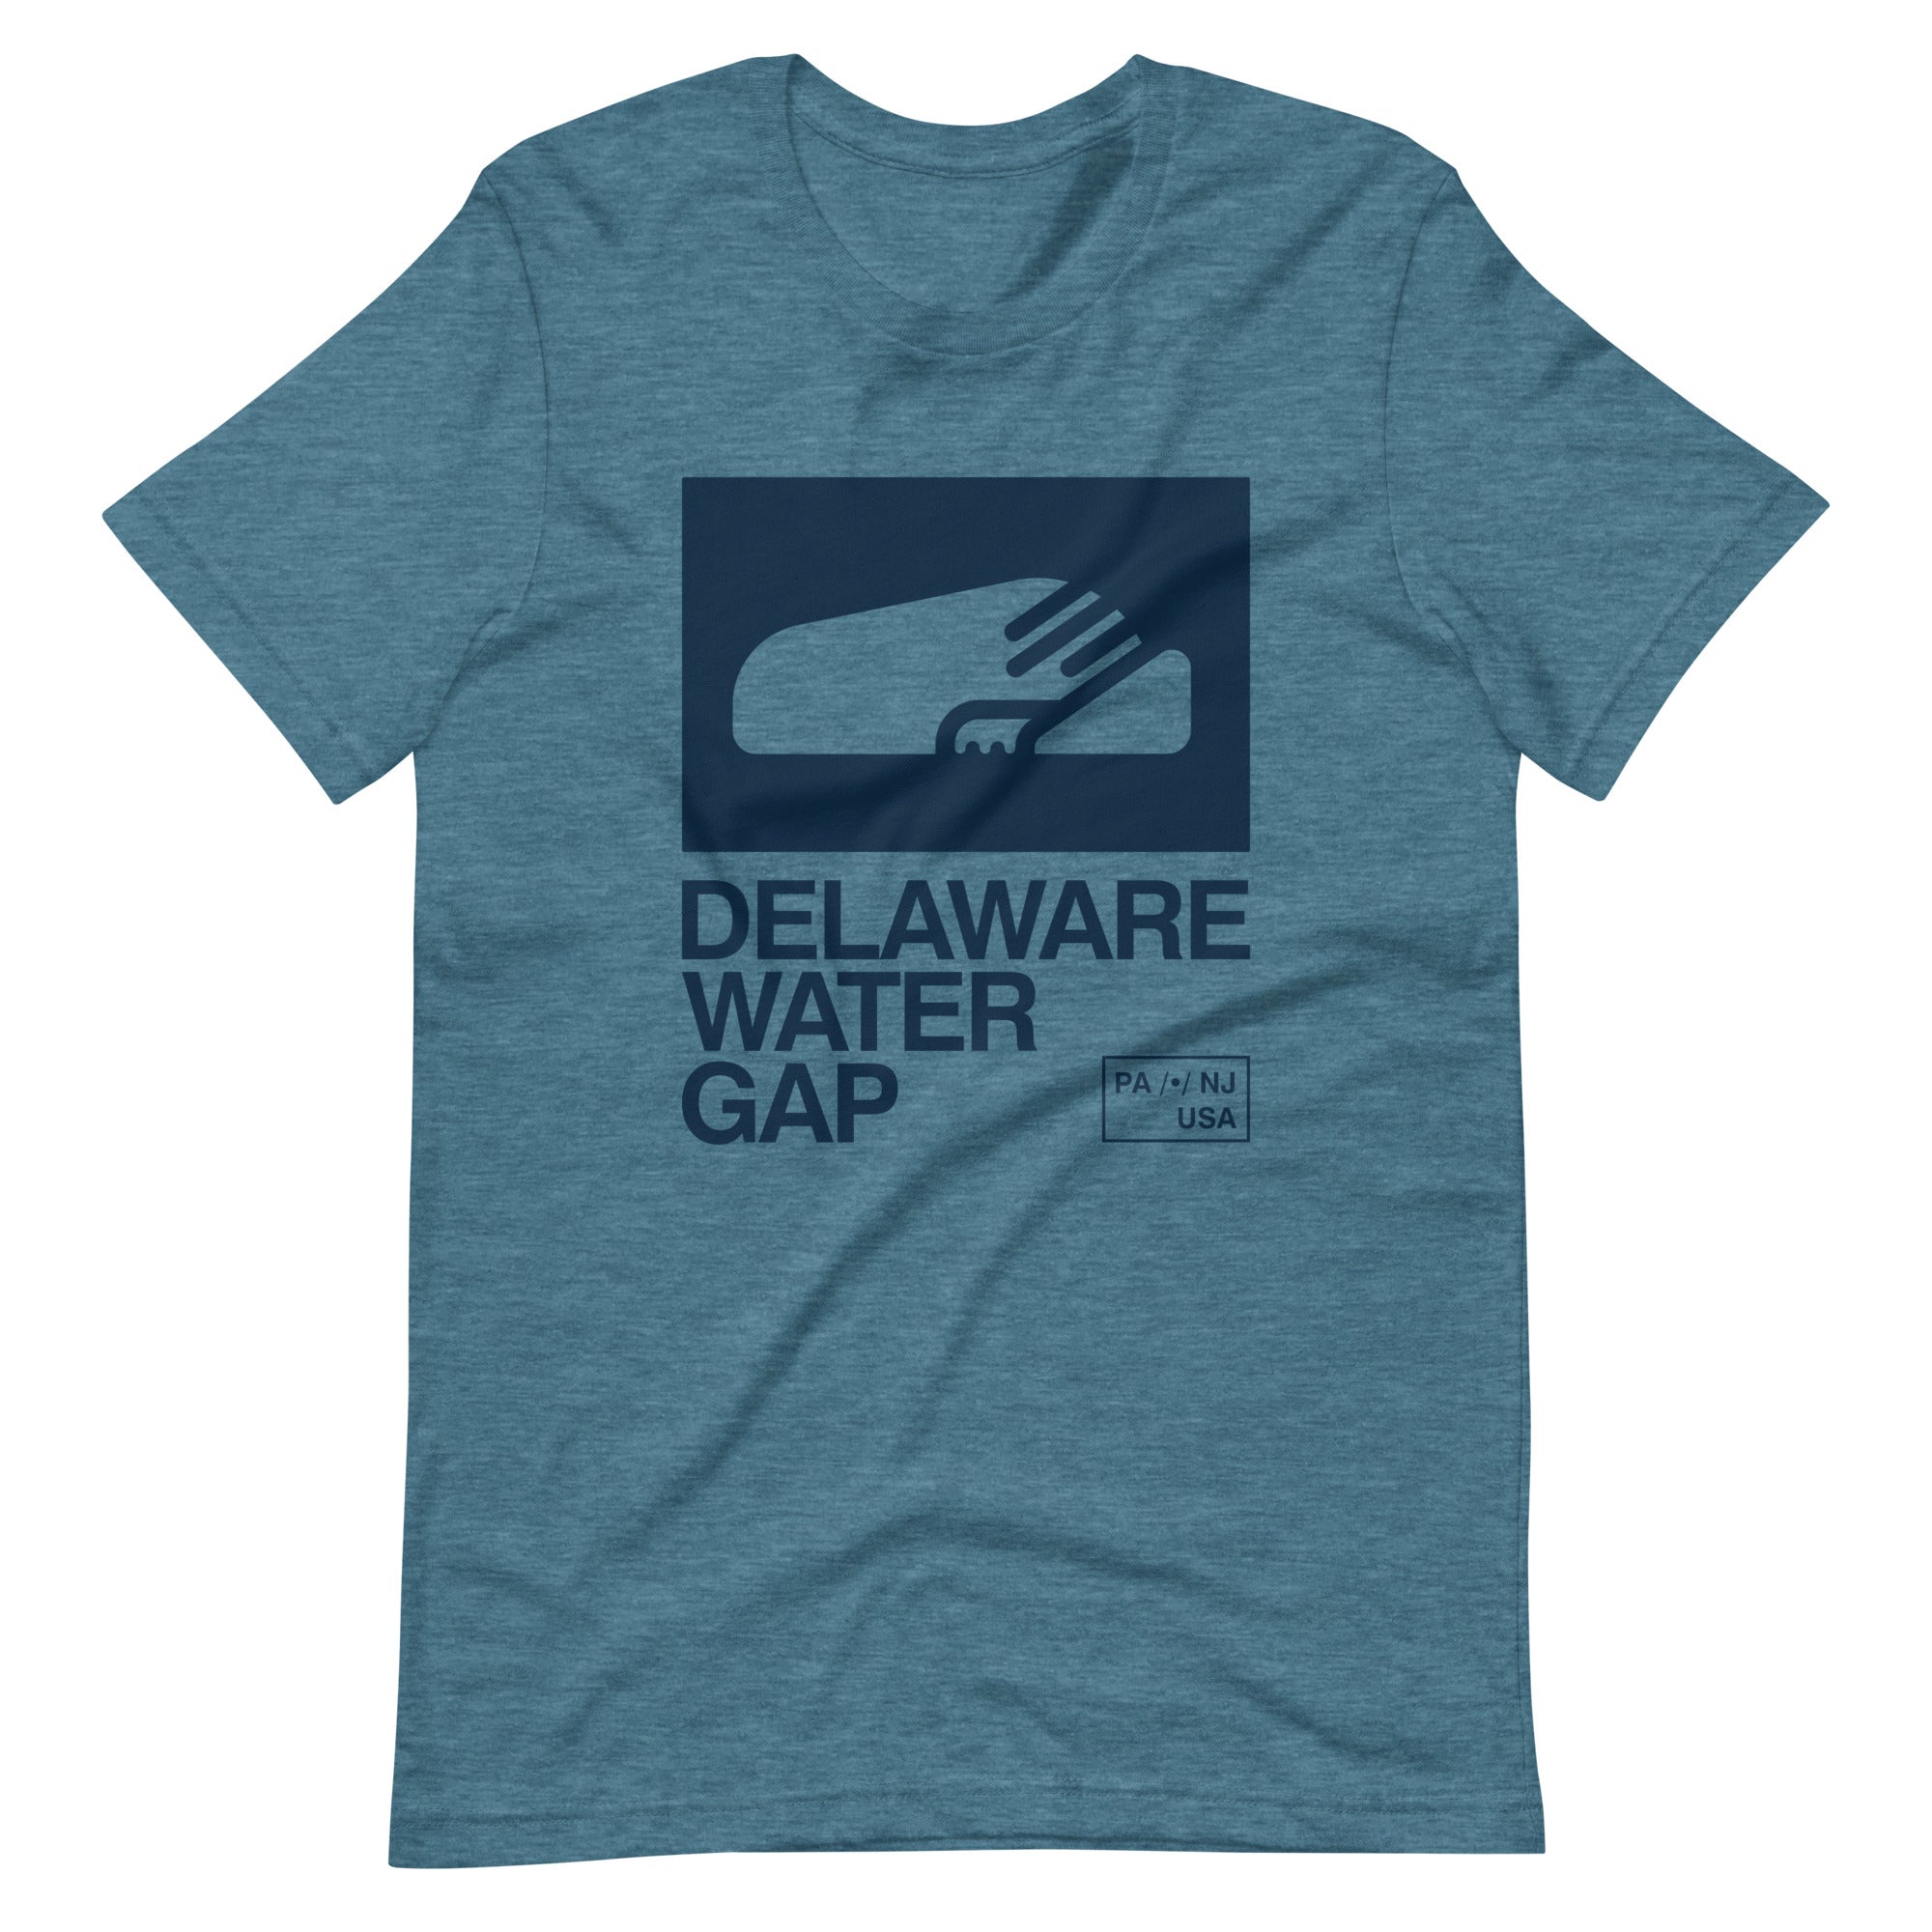 Delaware Water Gap Tee